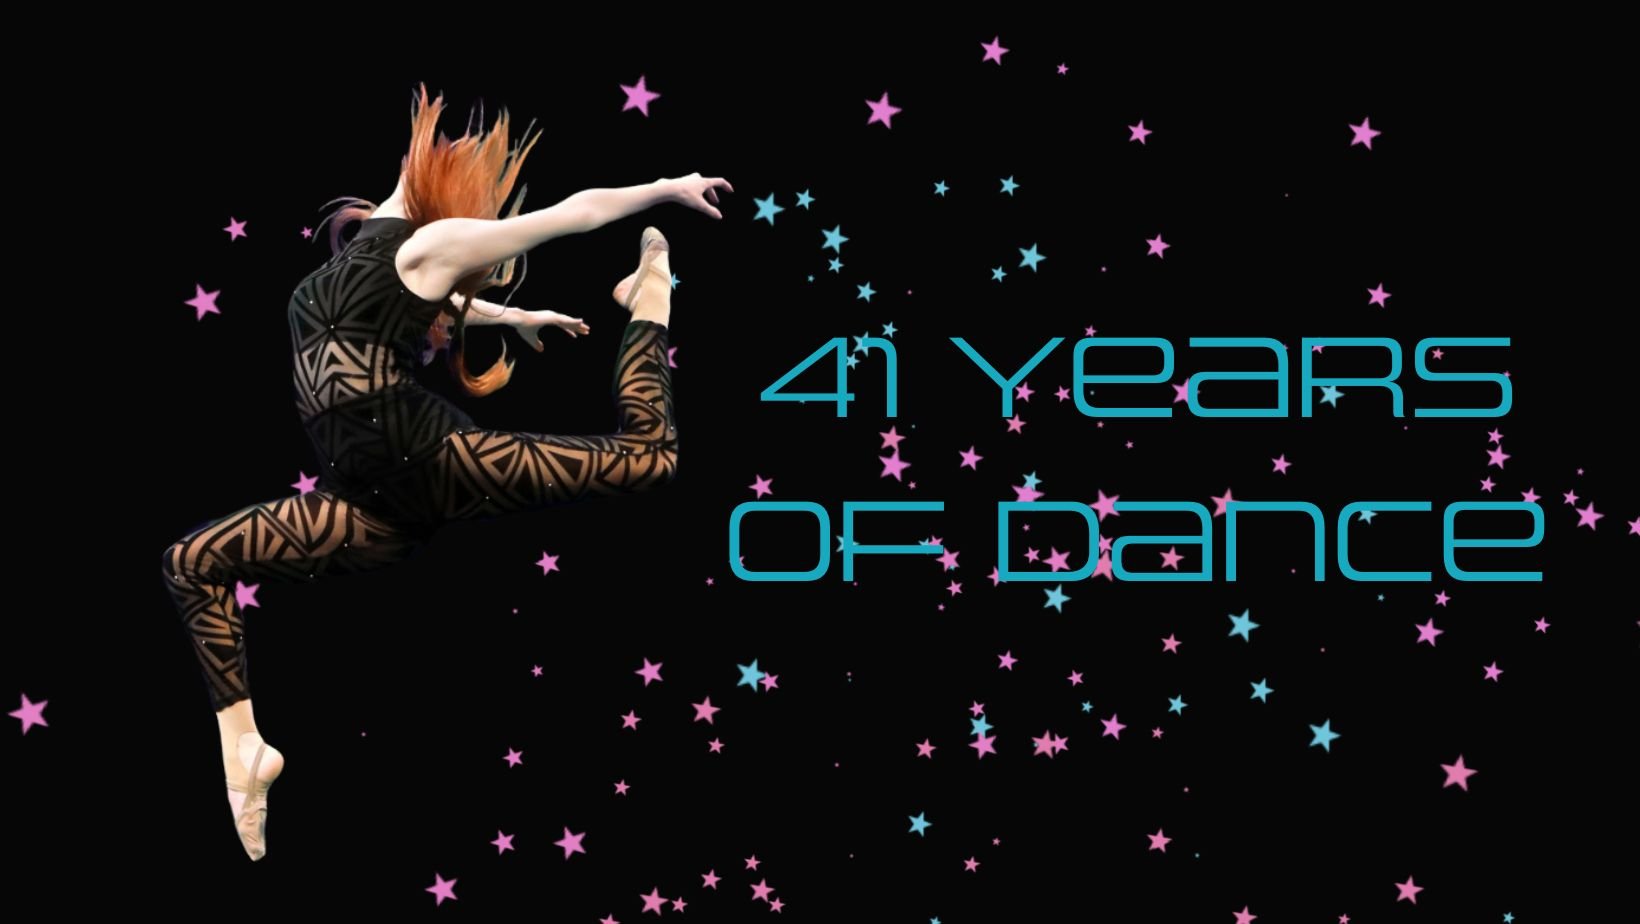 41 years of dance